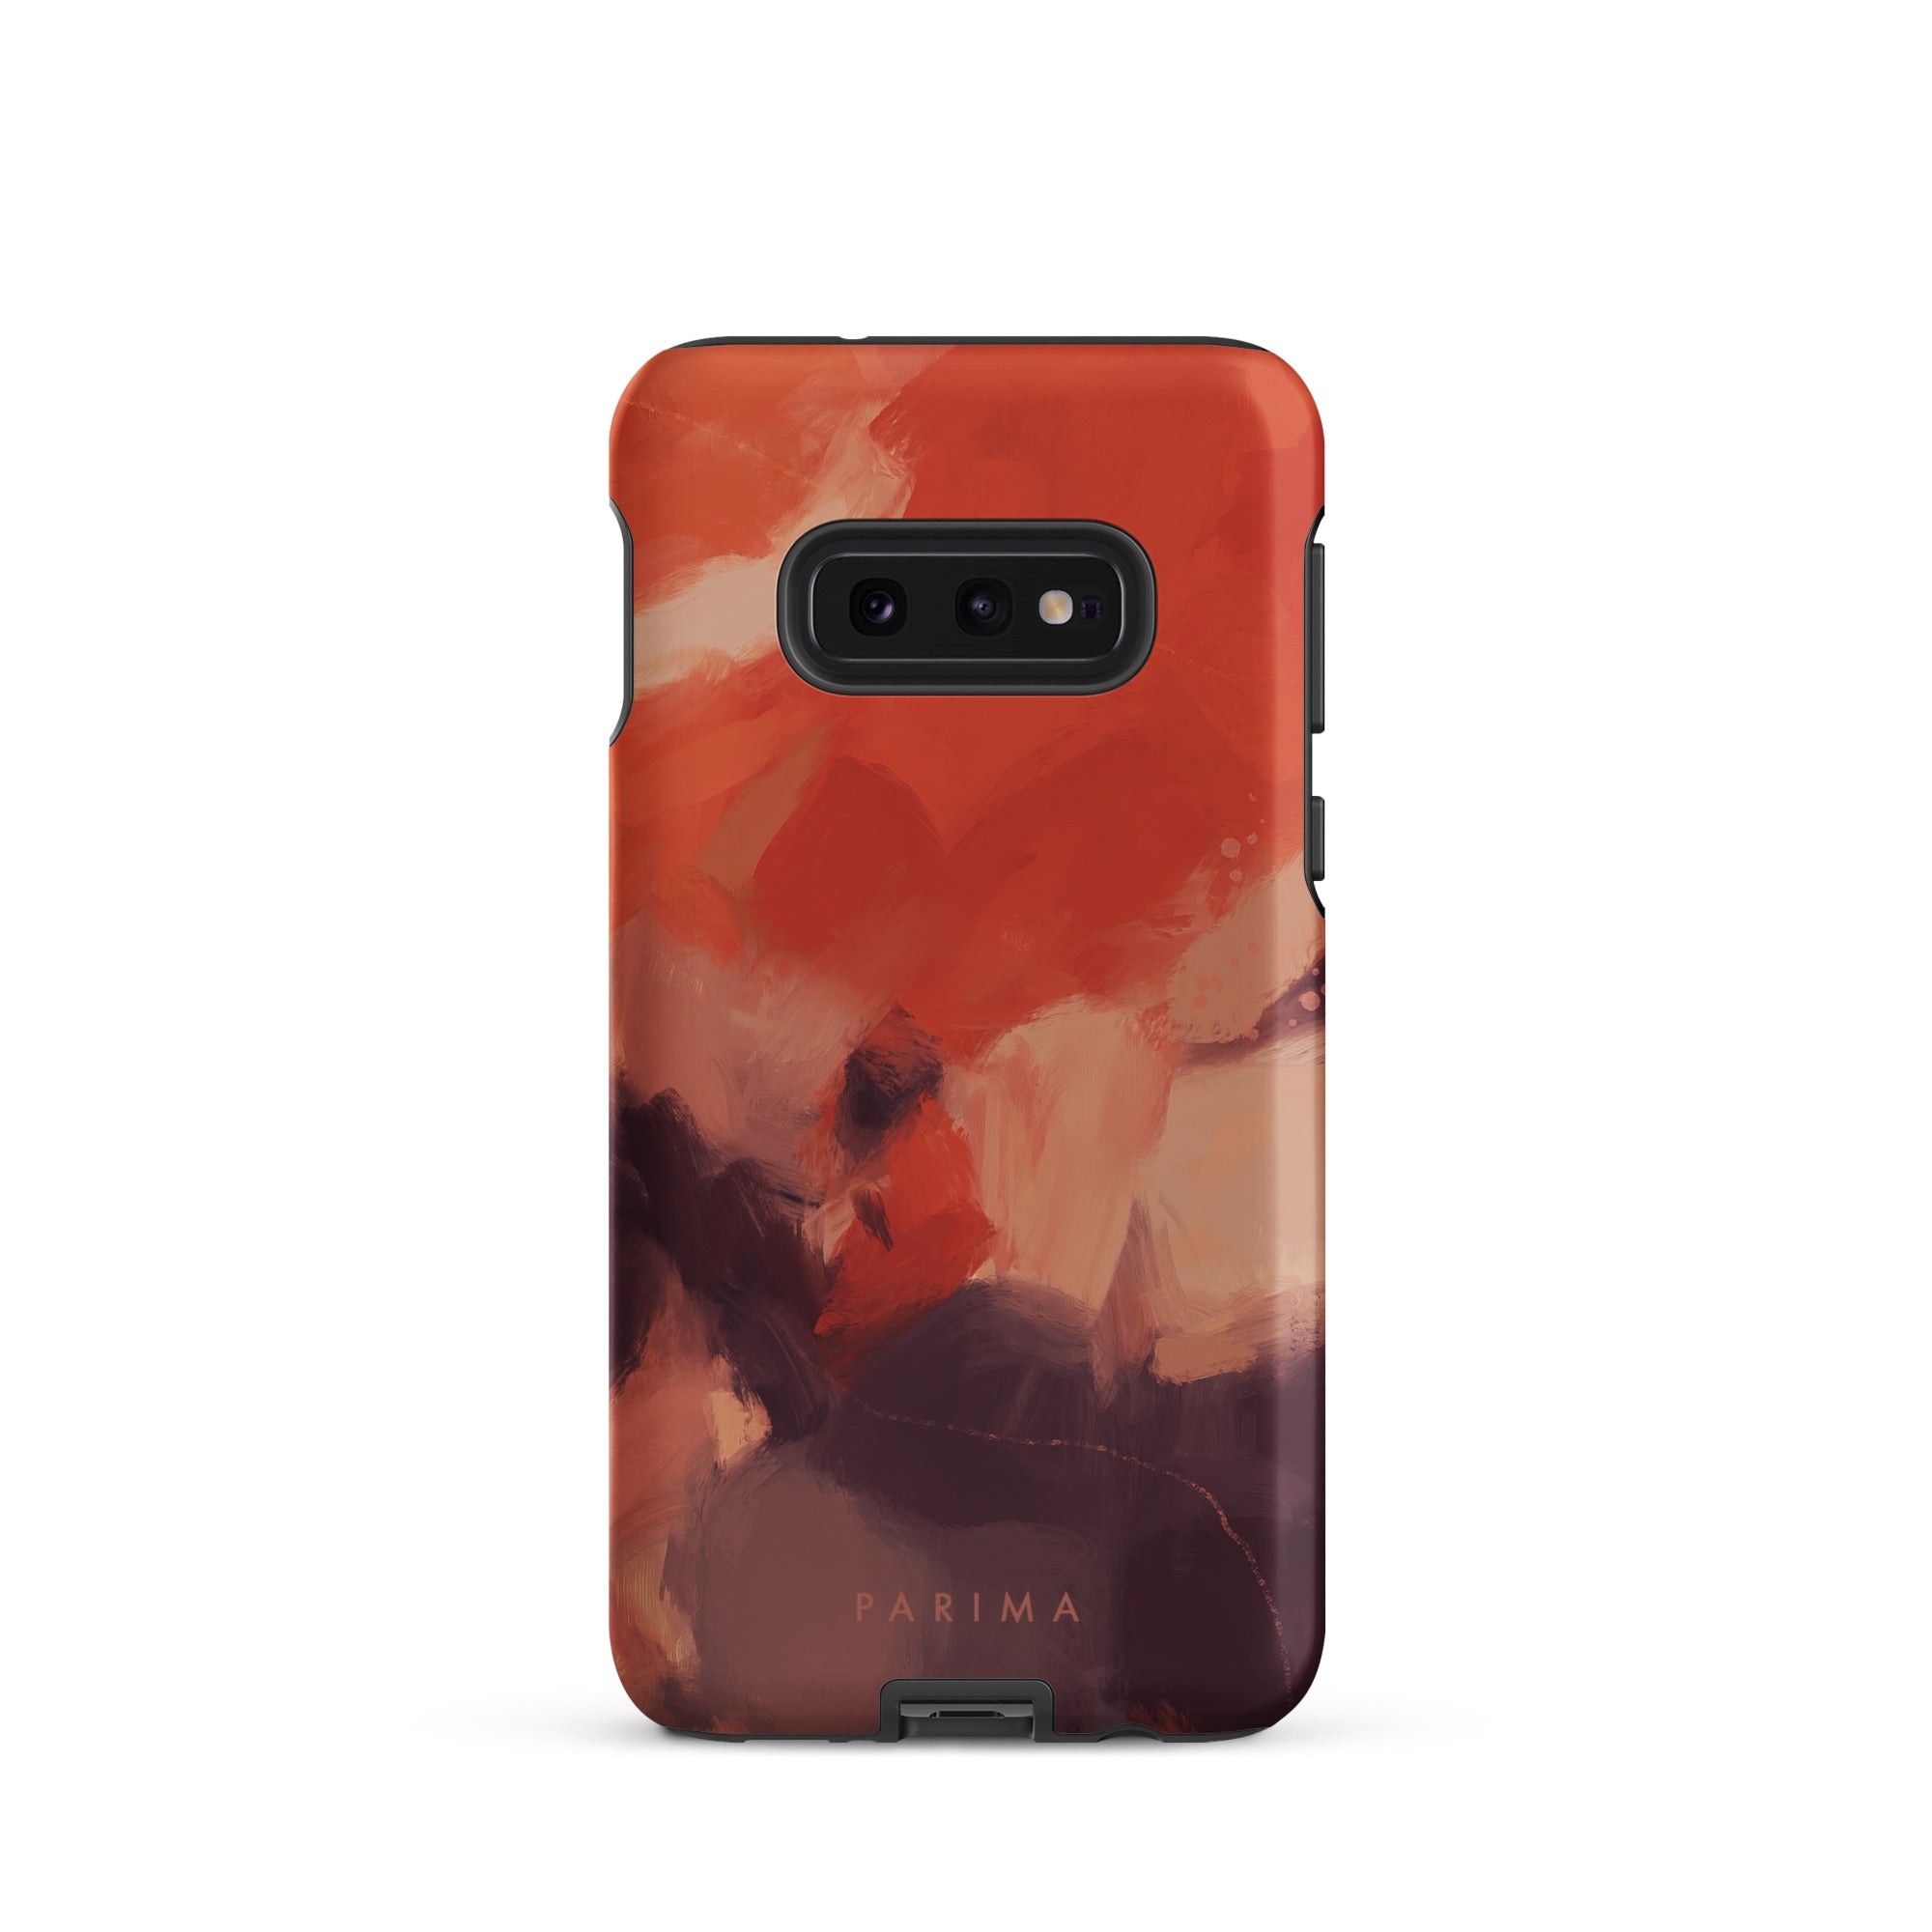 Autumn, orange and purple abstract art on Samsung Galaxy S10e tough case by Parima Studio